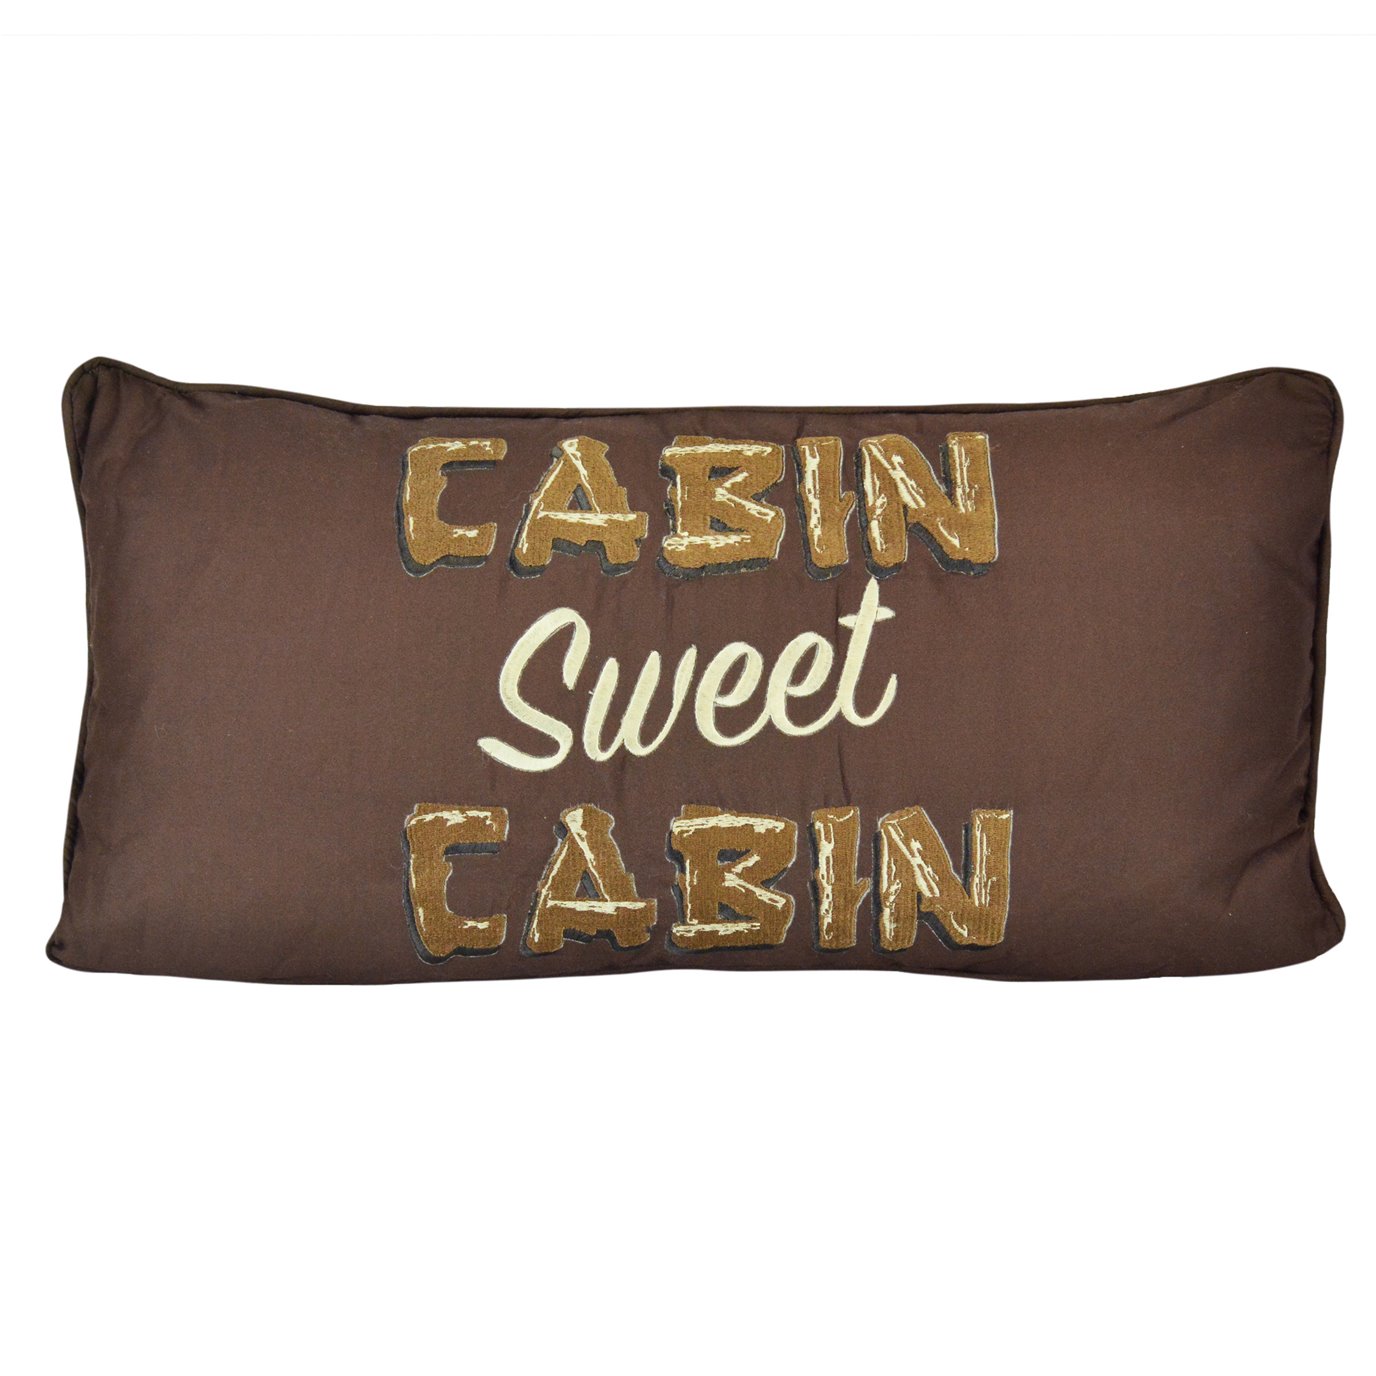 Mountain Stream "Cabin" Decorative Pillow